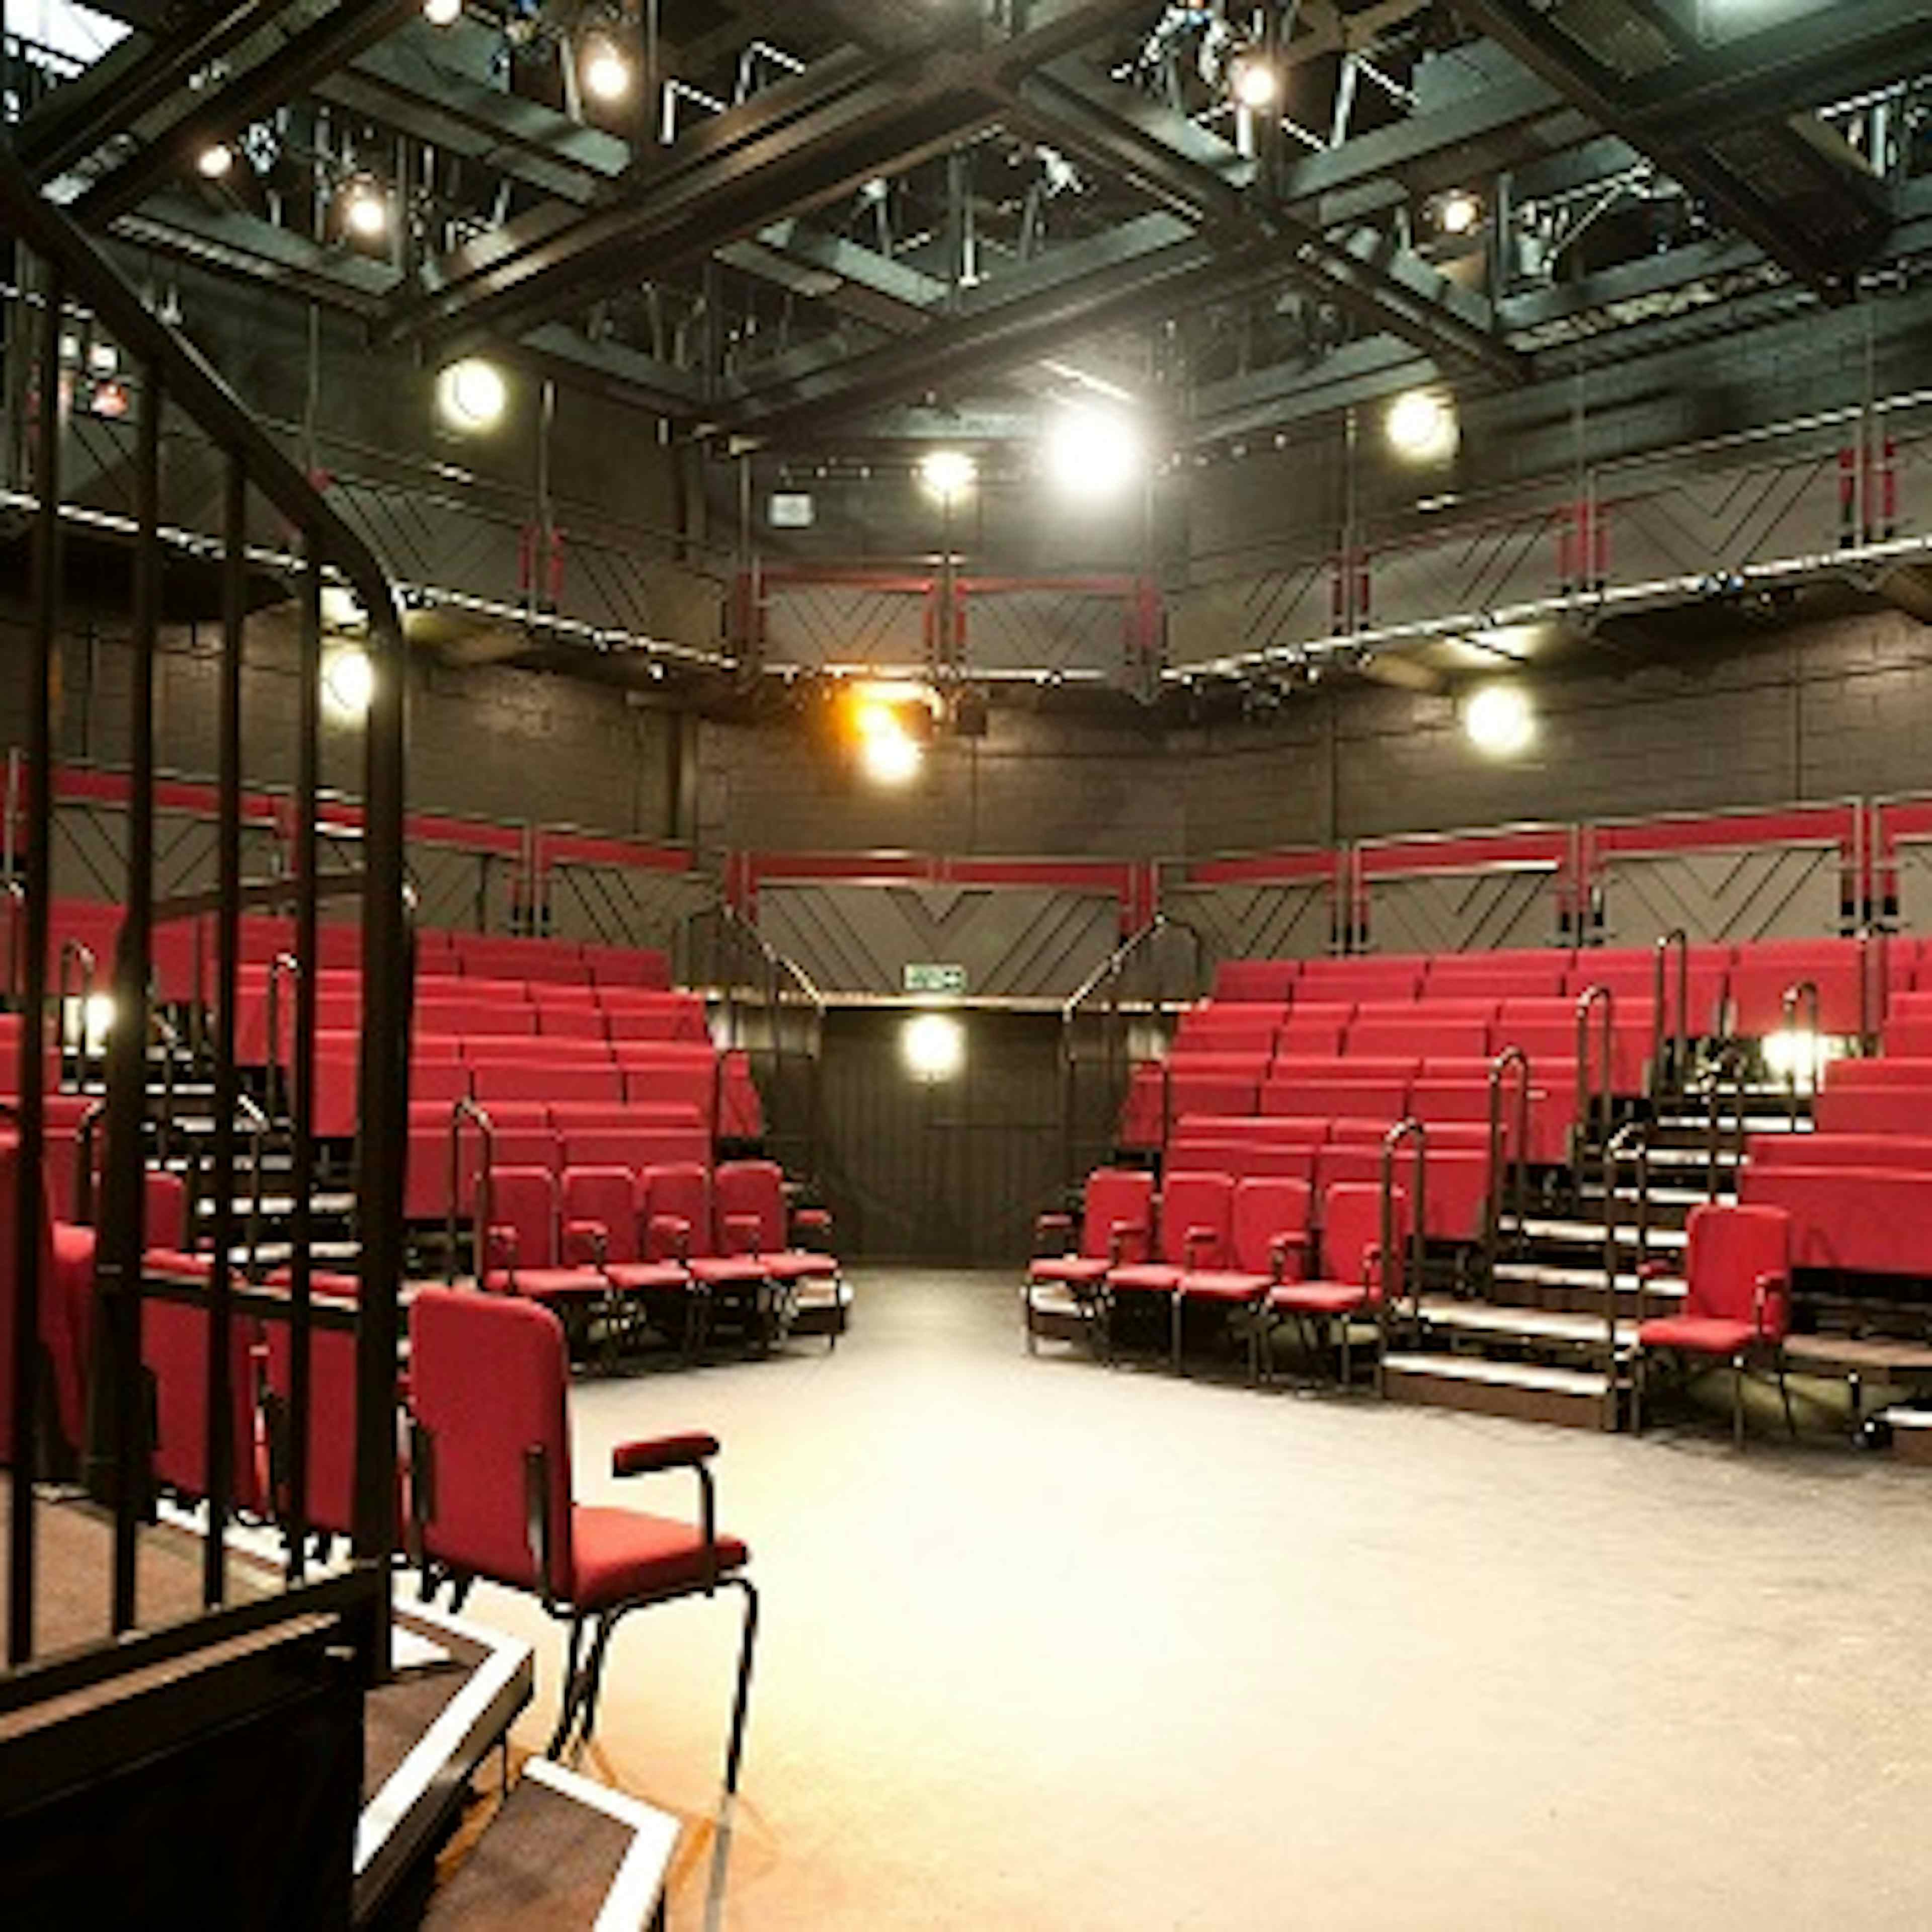 Crucible Theatre - Playhouse image 3